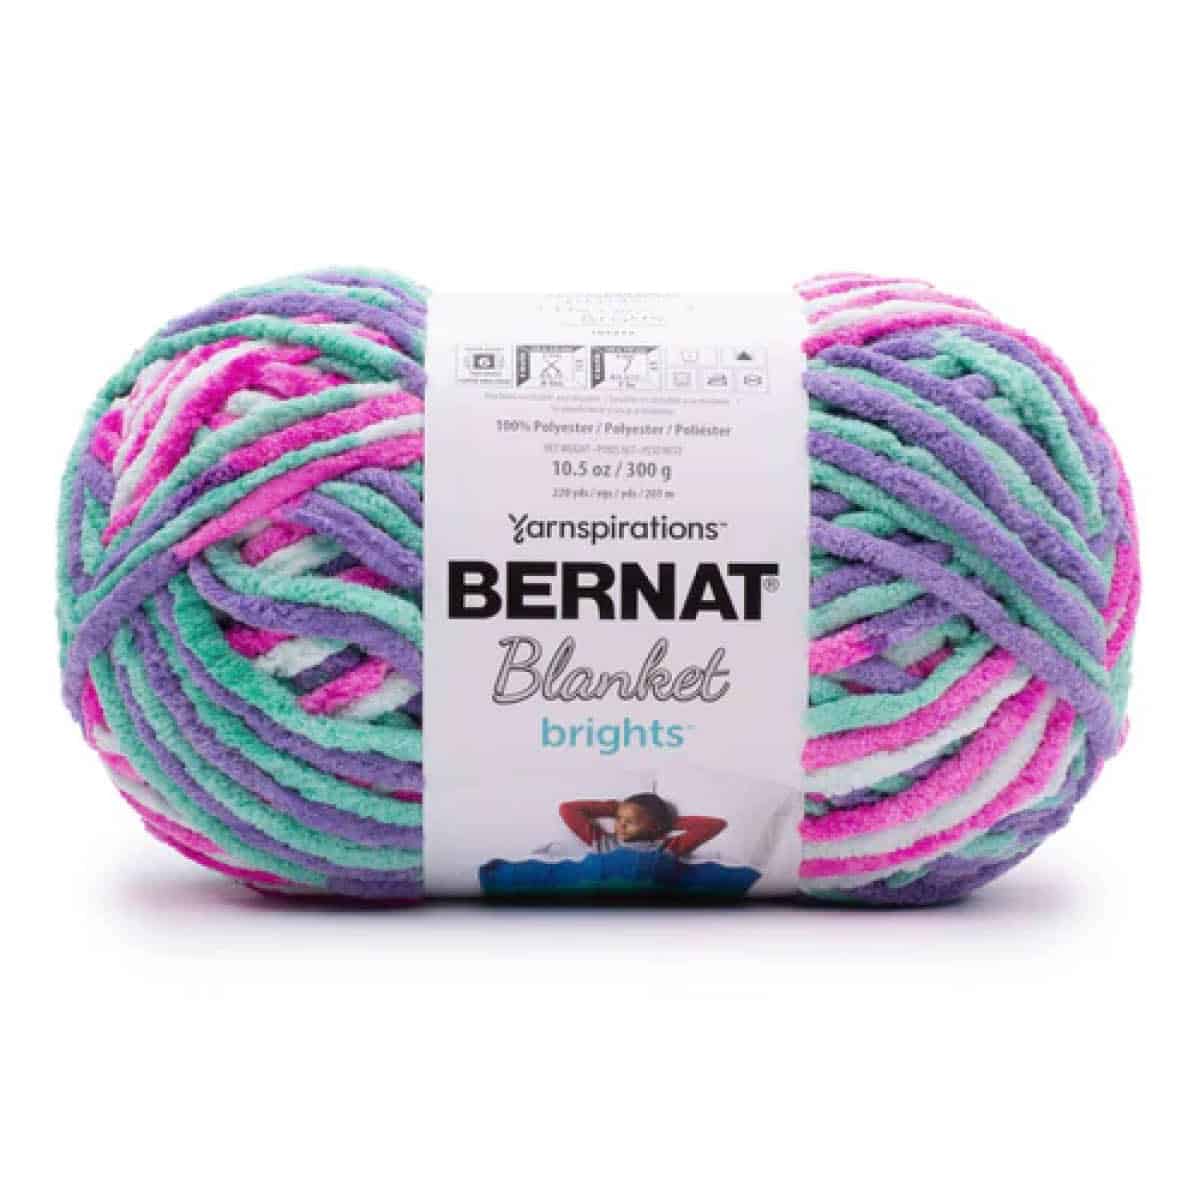 Bernat Blanket Brights Yarn Product